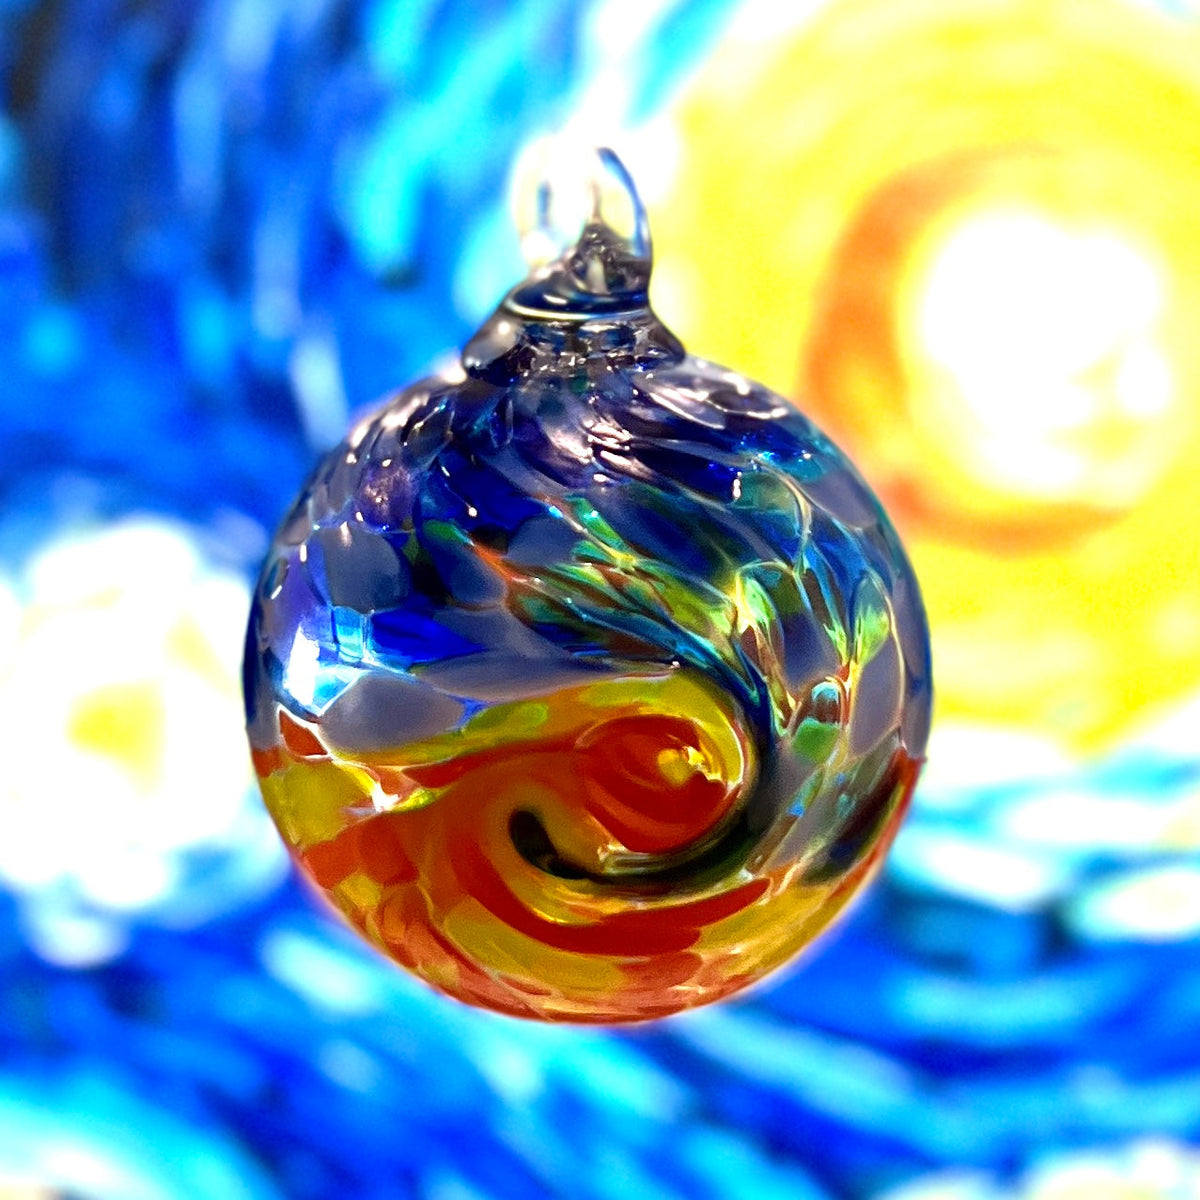 *FREE SHIPPING* Mini Ornament, Starry Night Ornament Luke Adams Glass Blowing Studio 